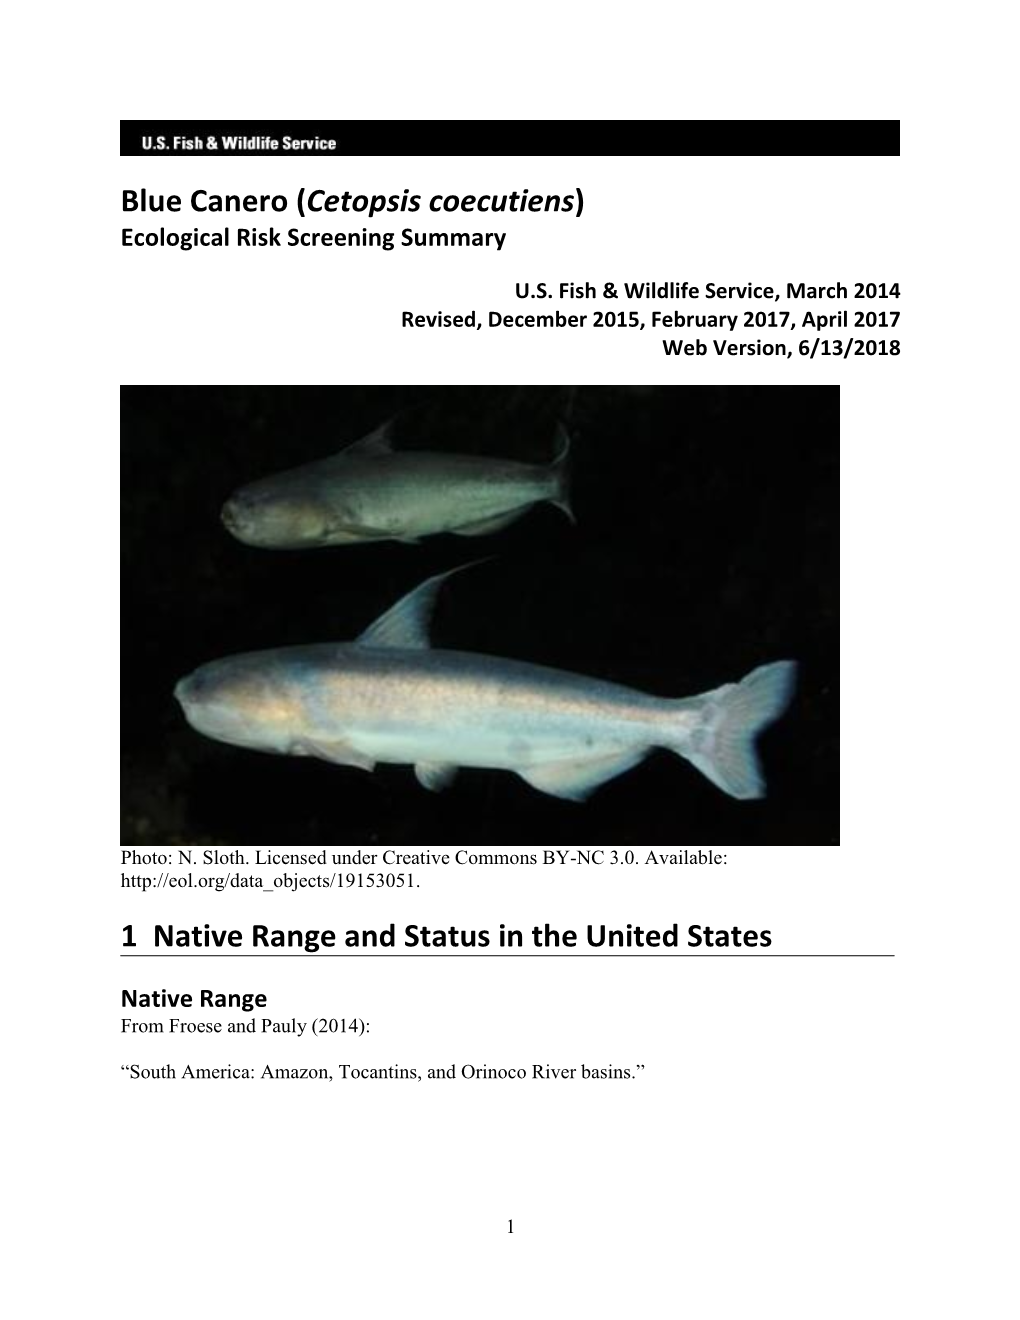 Cetopsis Coecutiens) Ecological Risk Screening Summary